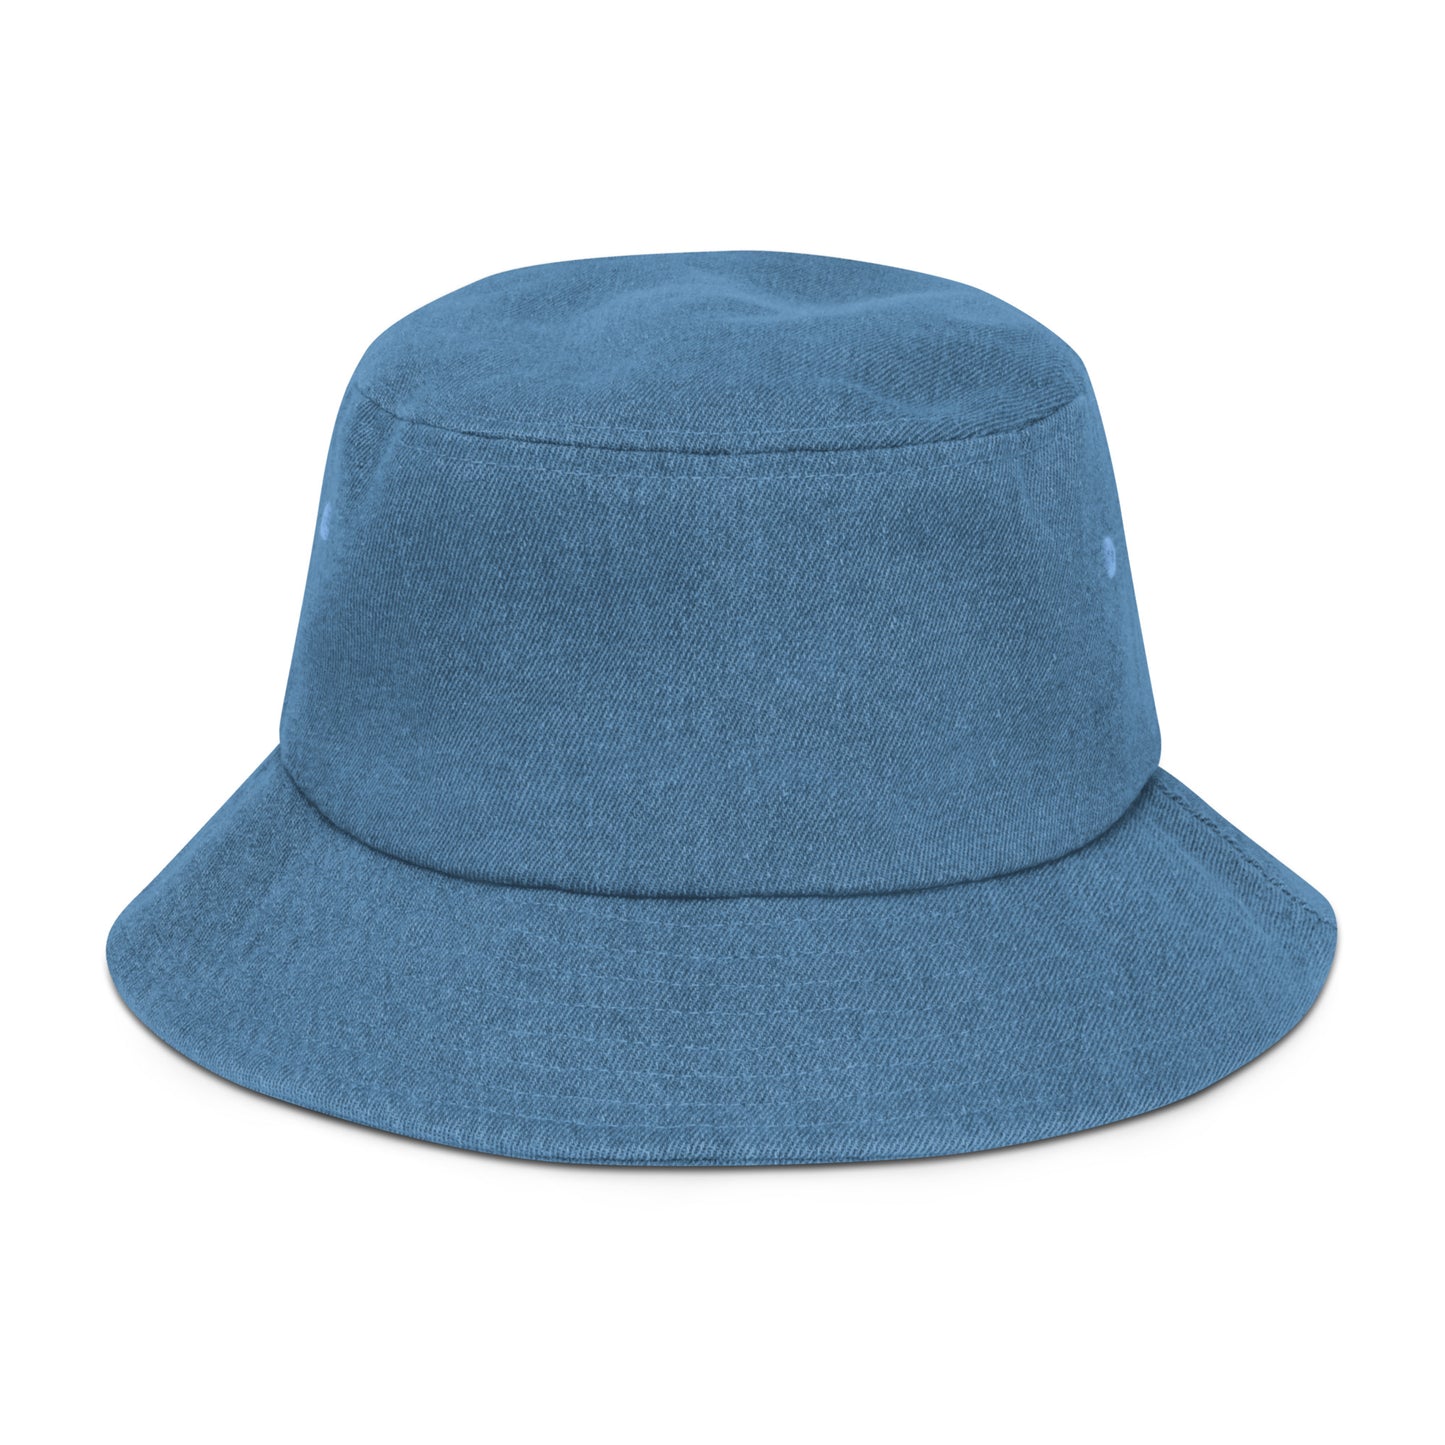 Advisory Denim bucket hat